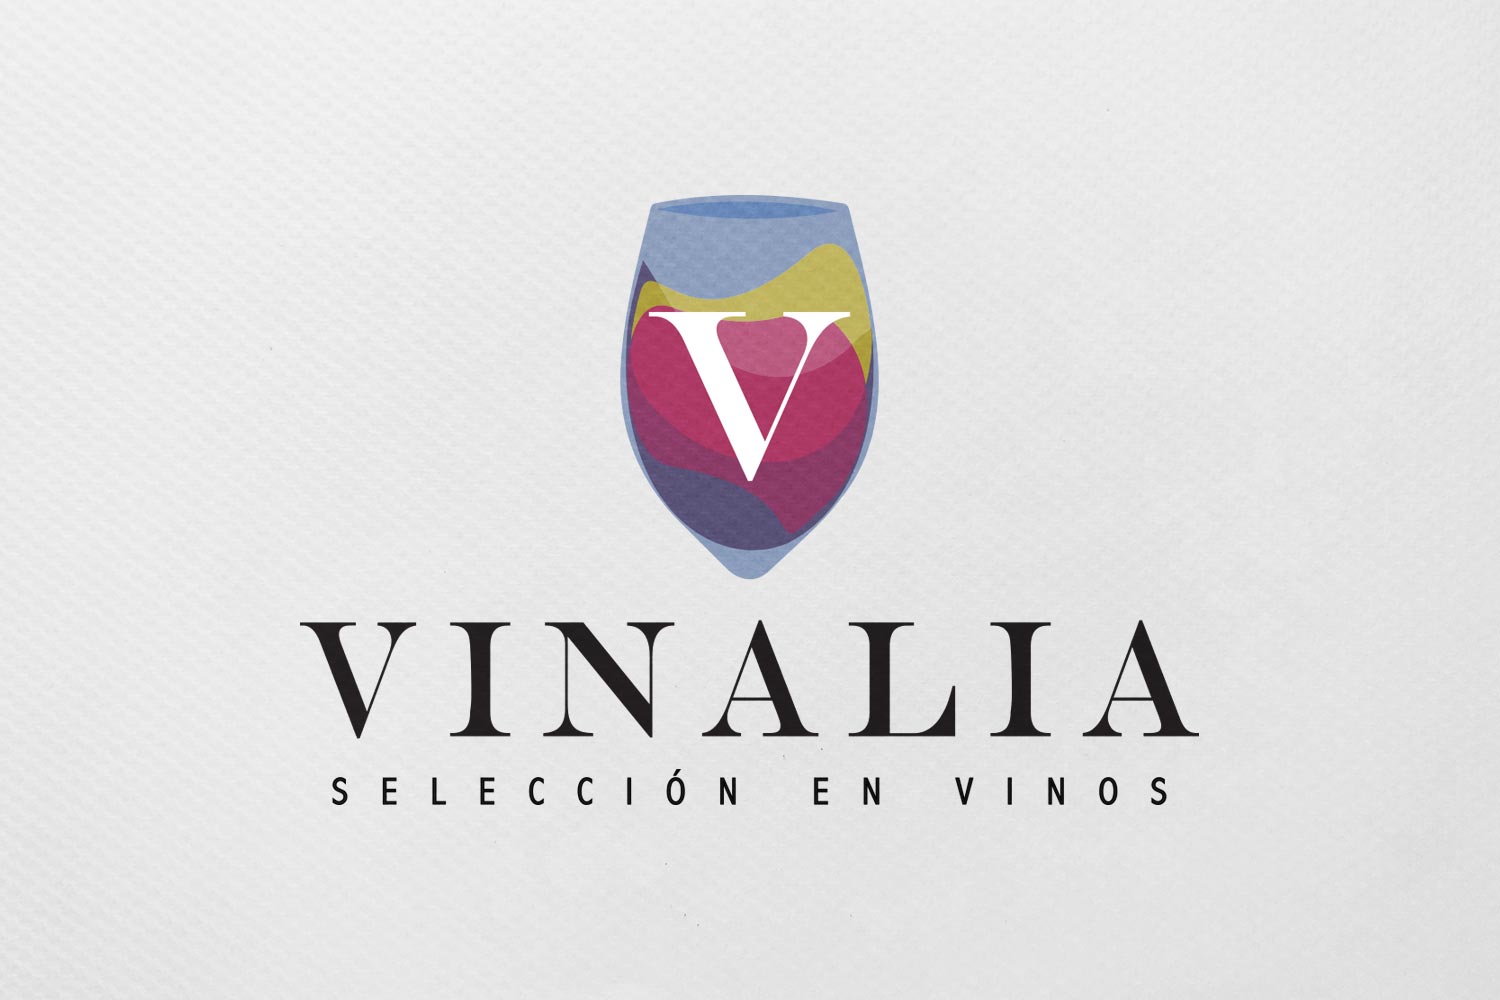 Vinalia, León Guanajuato - Branding - Dosmaquinas: Design Studio